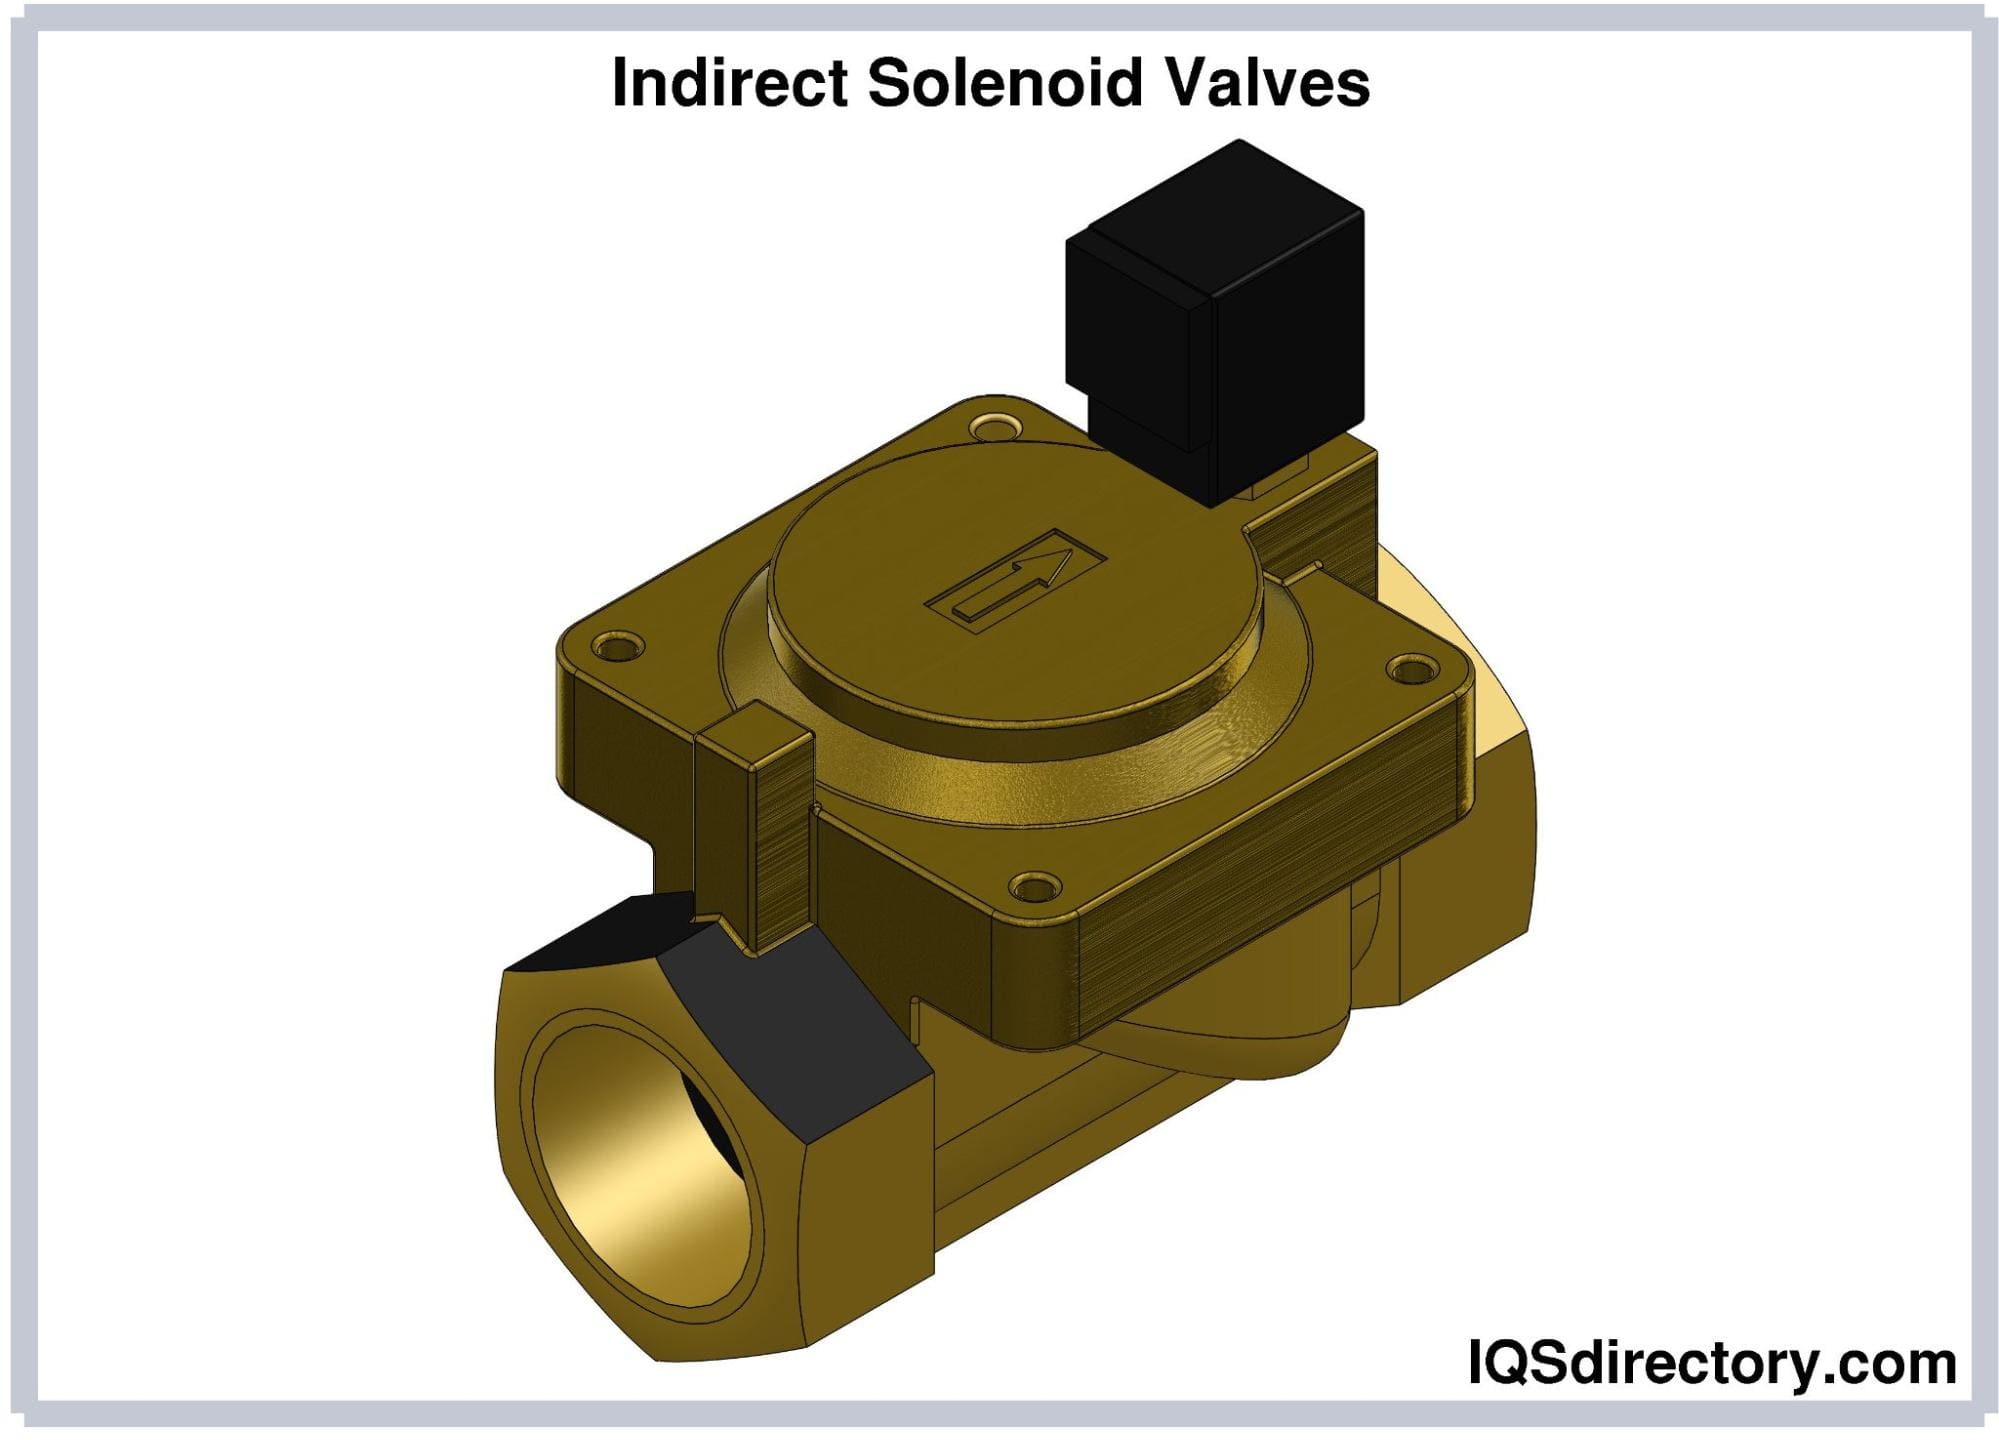 Indirect Solenoid Valves